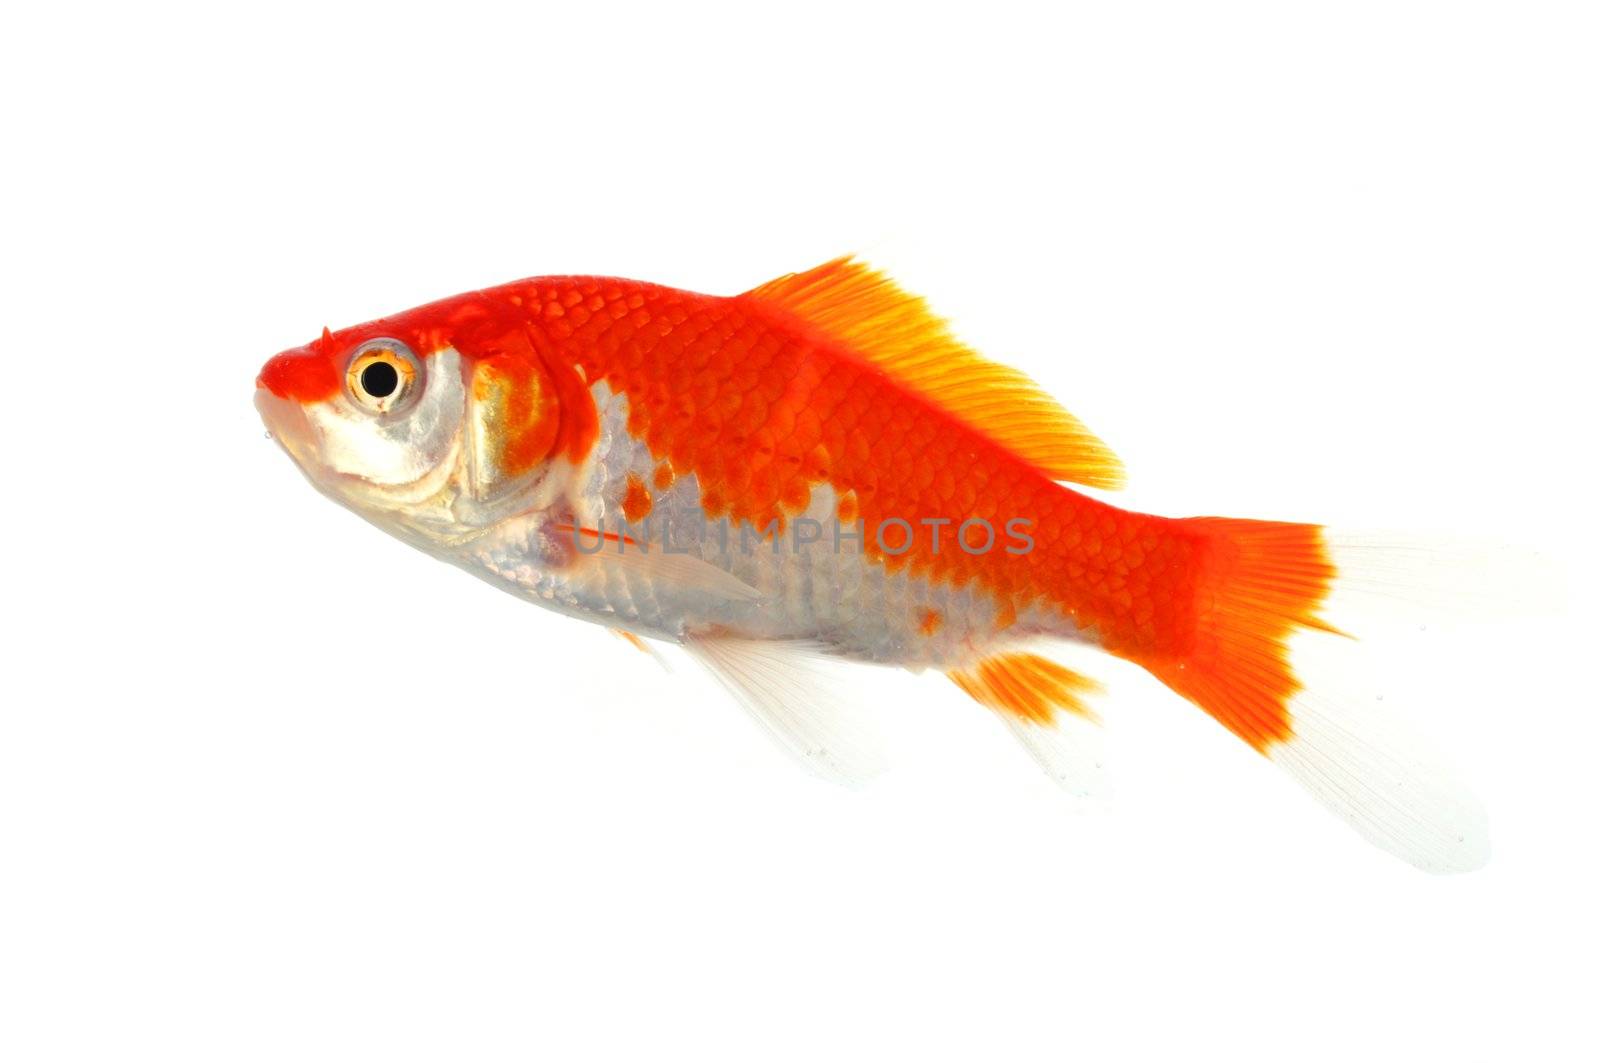 high quality image of goldfish swimming isolated on white background